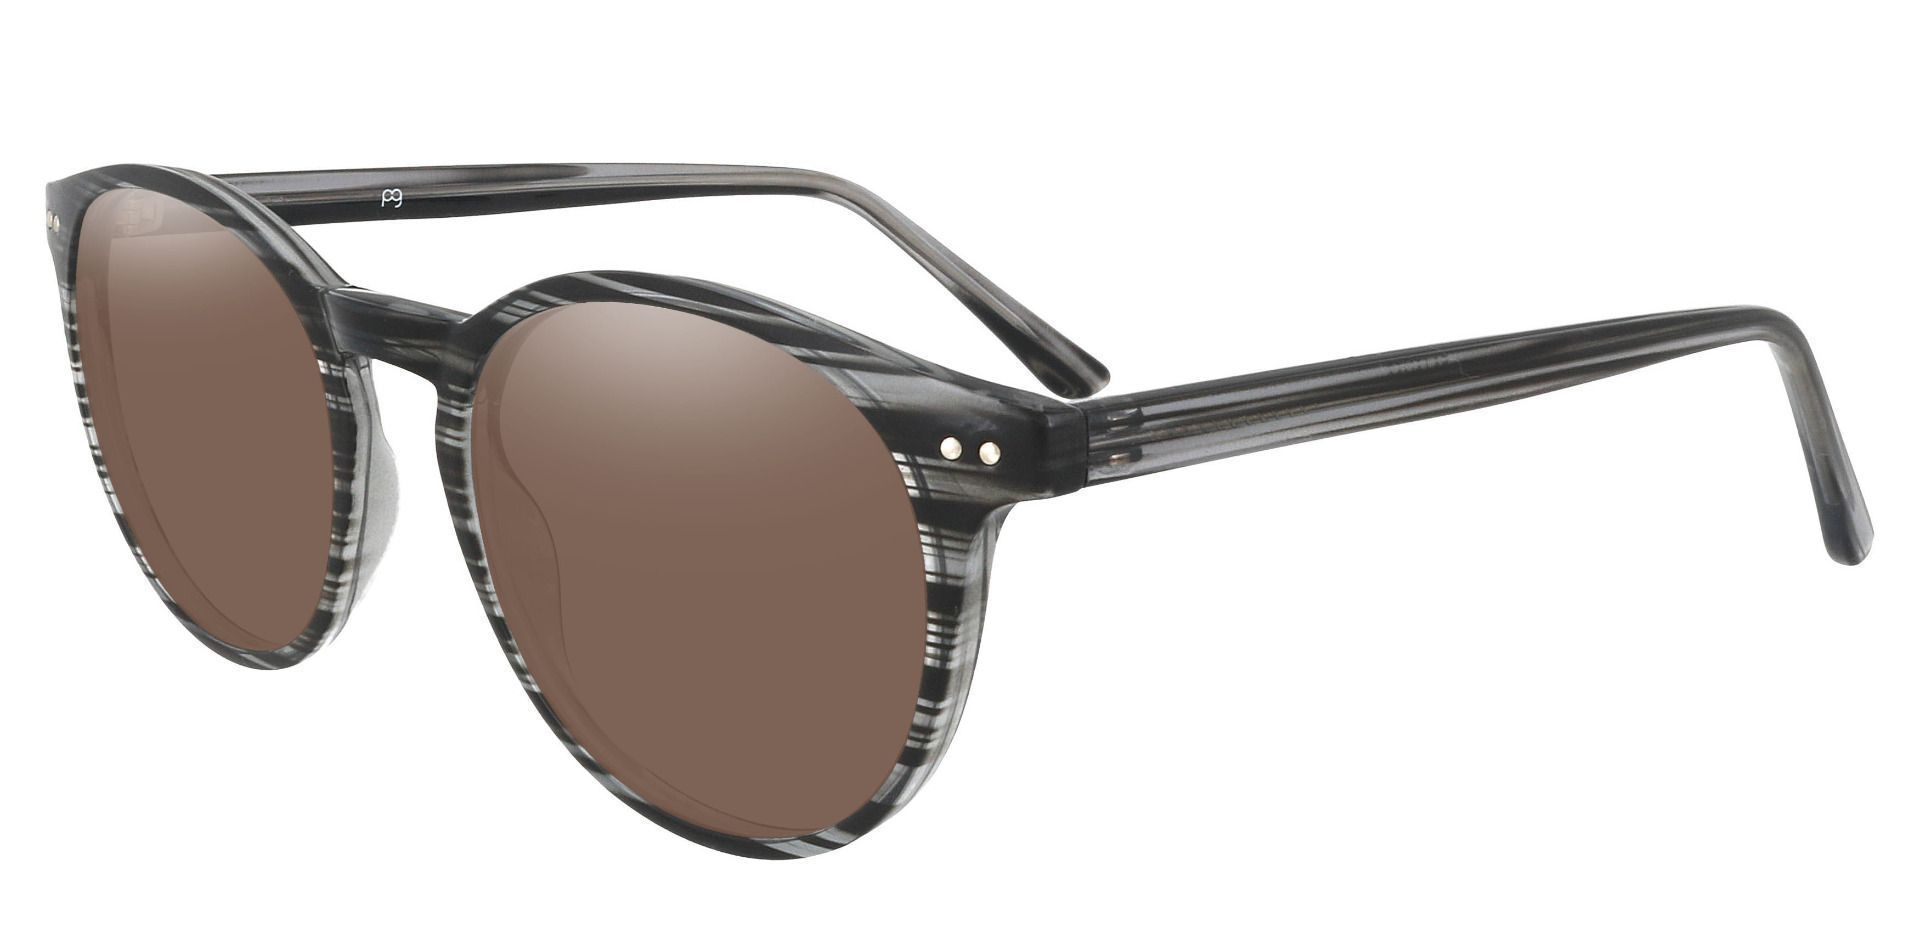 Dormont Round Prescription Sunglasses - Black Frame With Brown Lenses